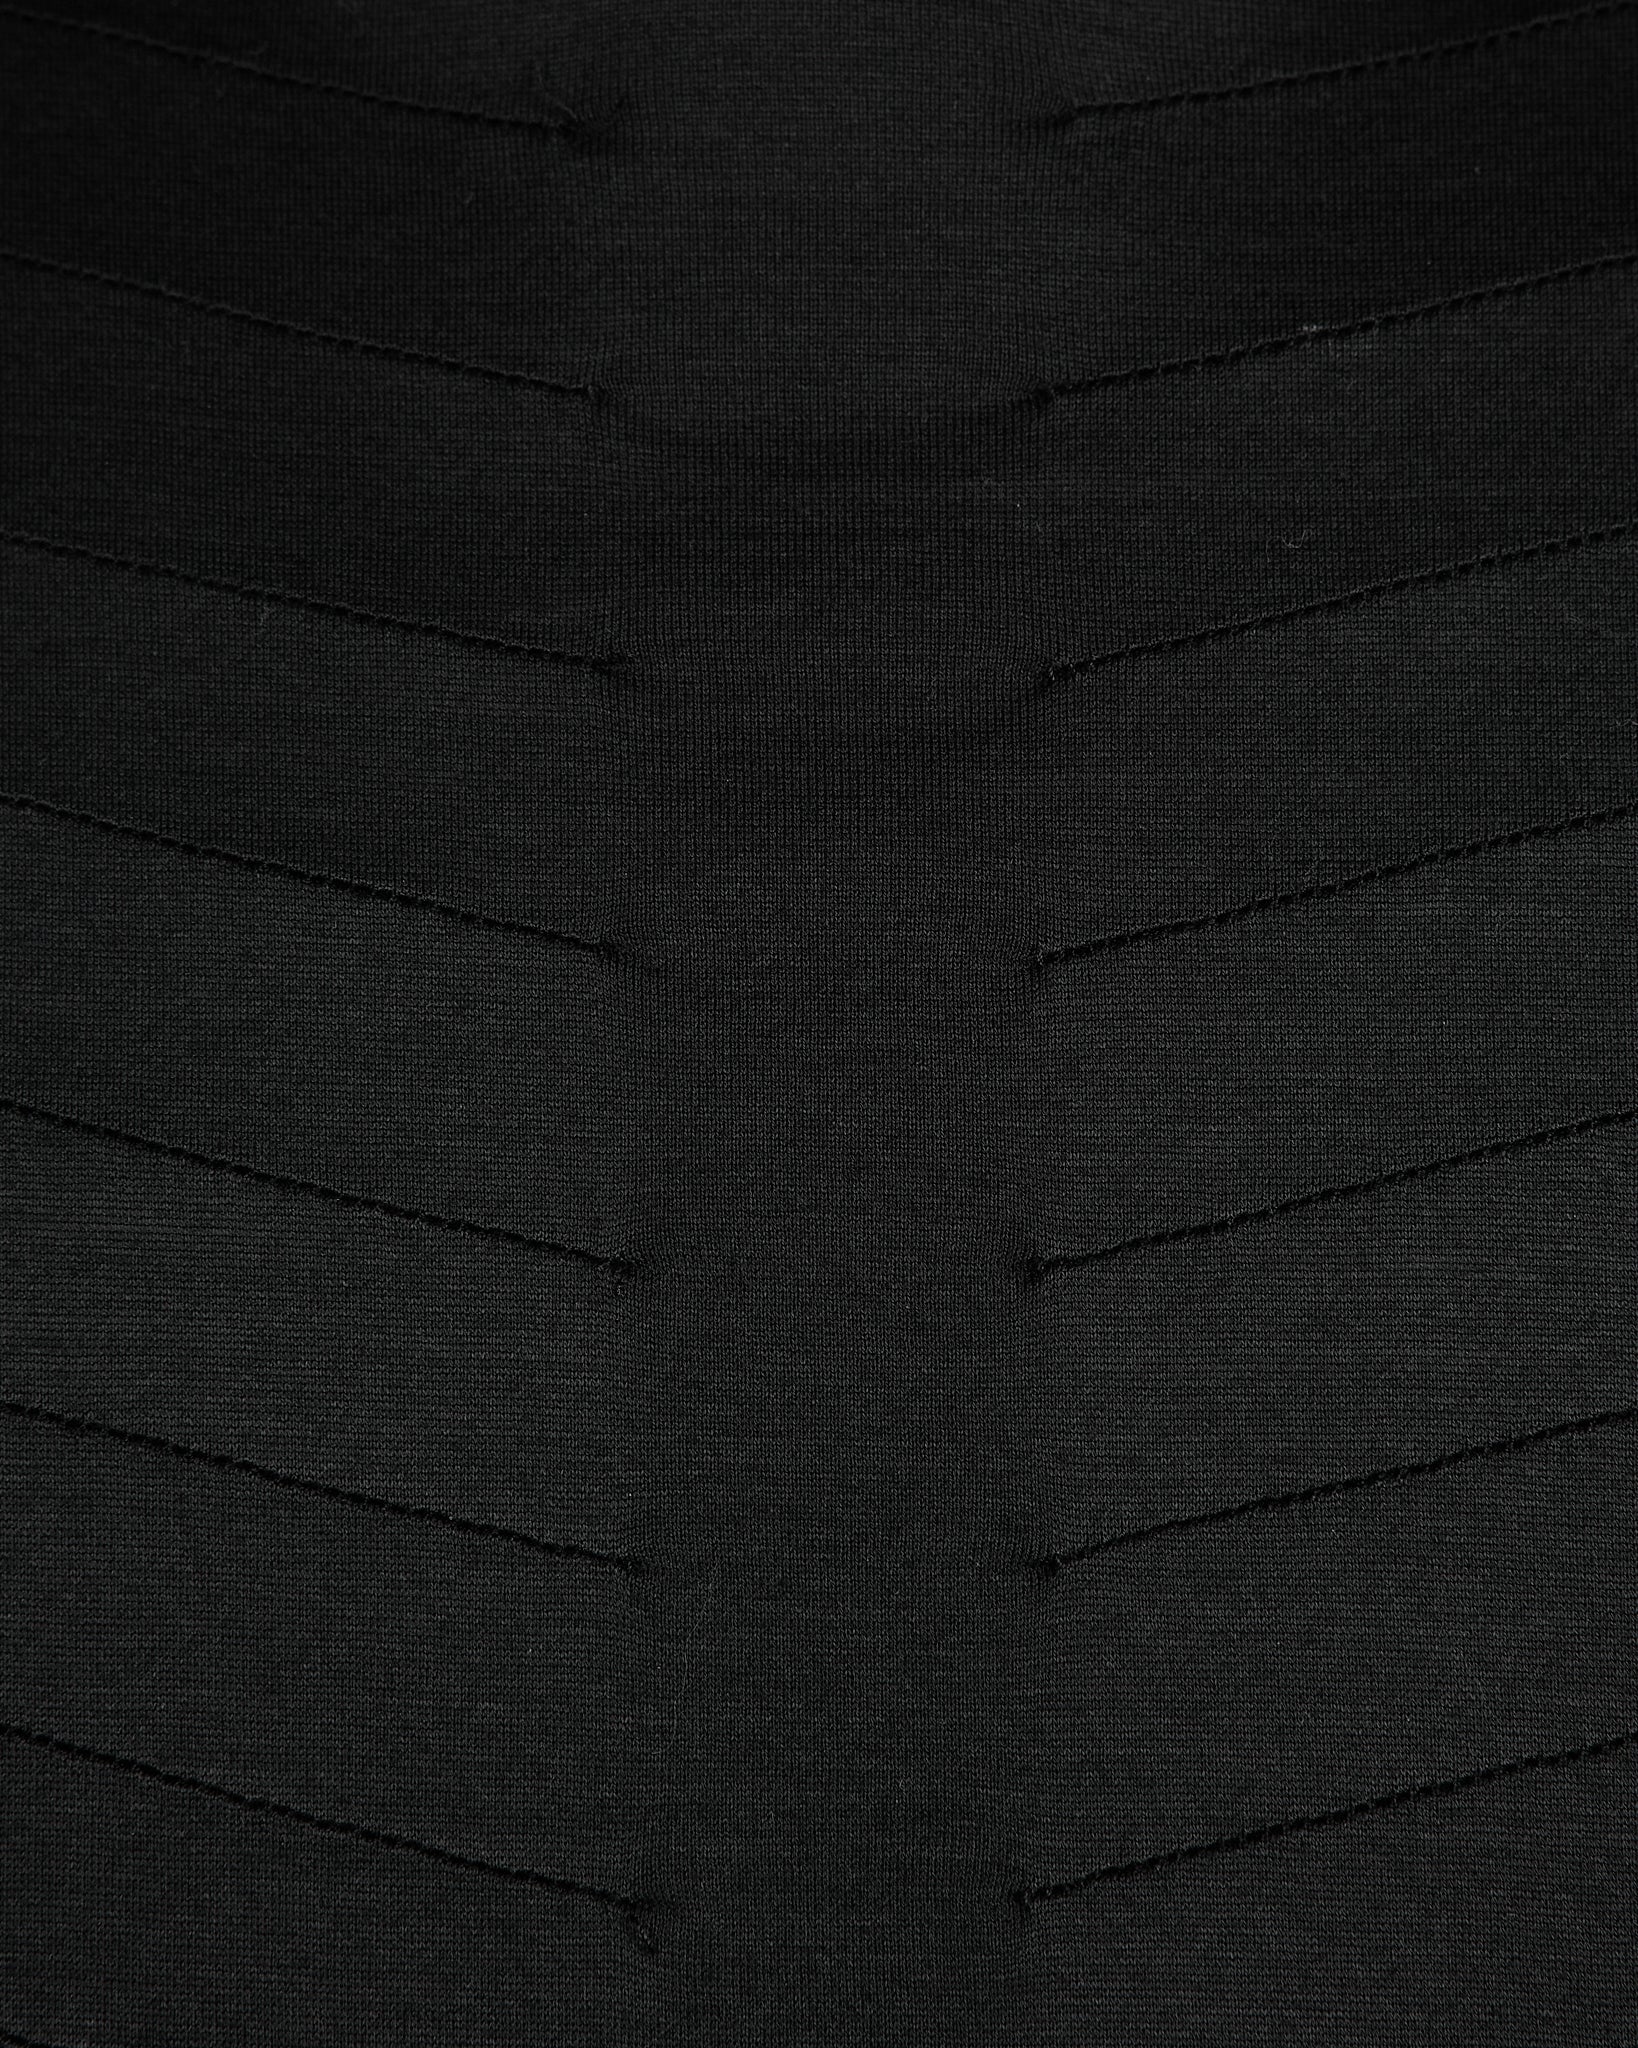 Dior Homme Mercerized Turtleneck Top - AW02 "Reflexion" detail photo